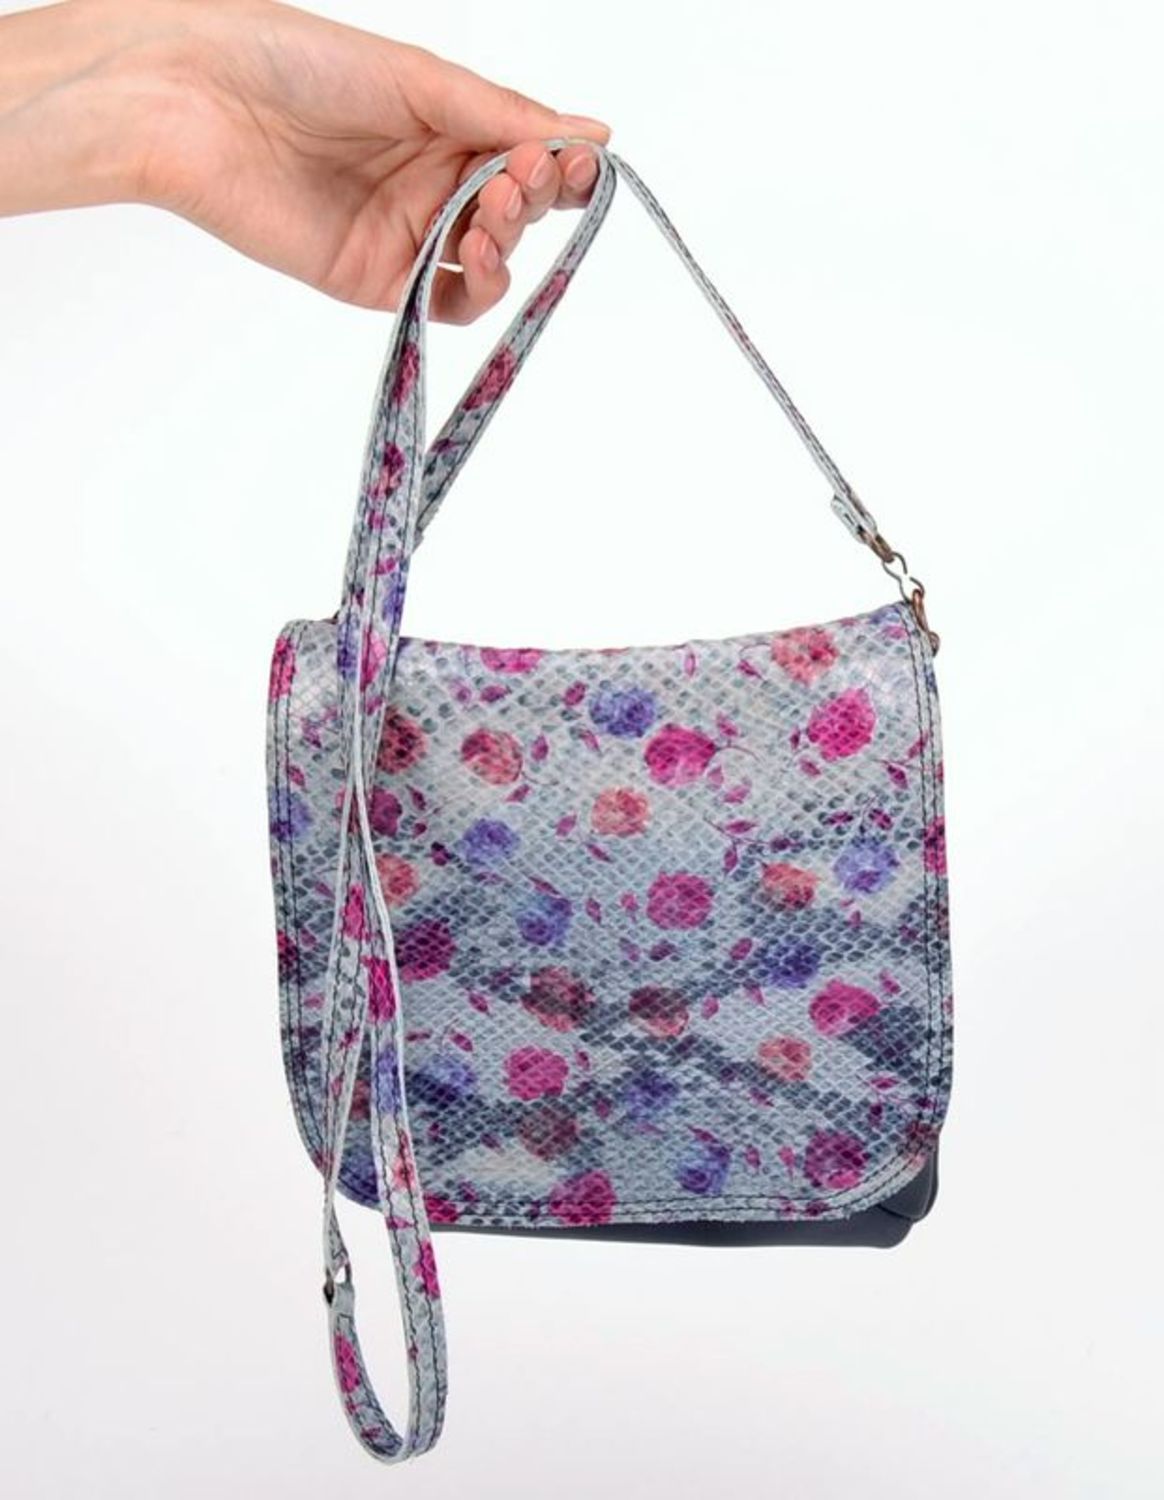 Leather shoulder bag with floral print photo 3